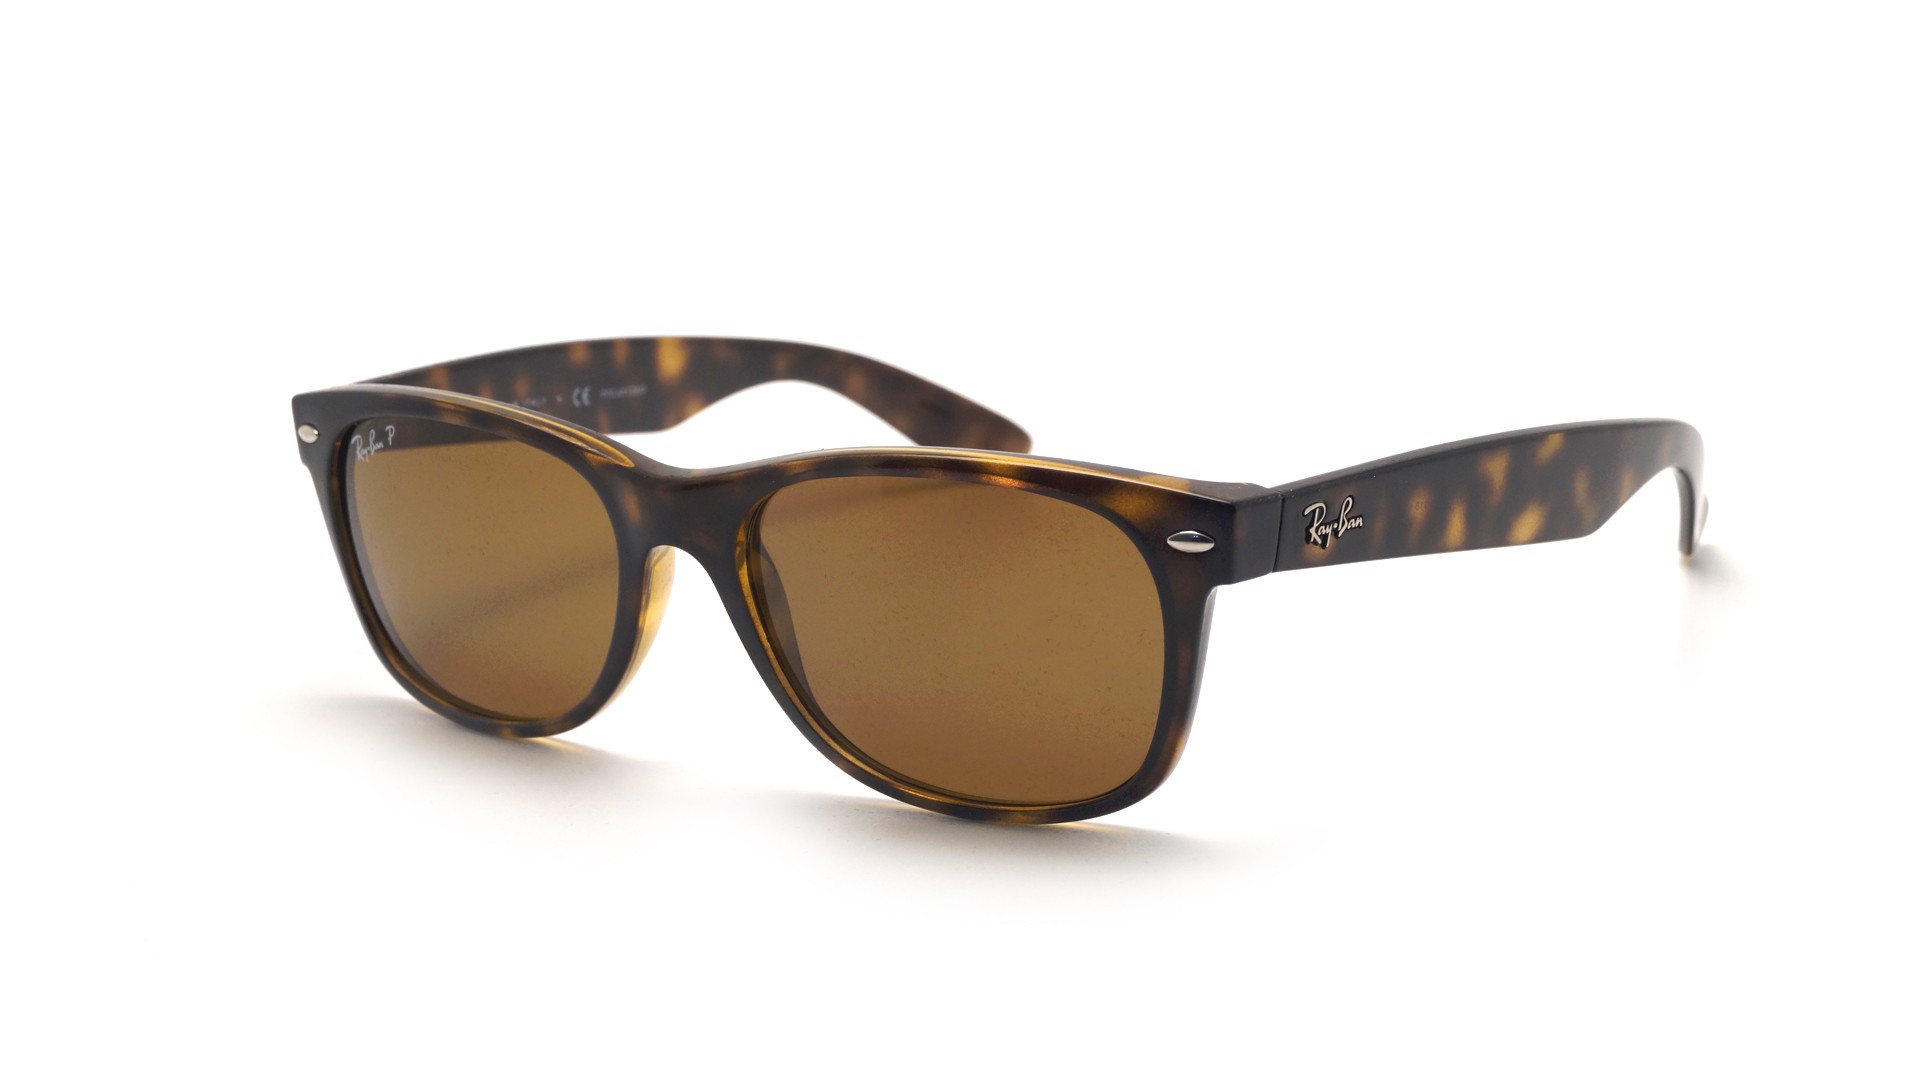 Sunglasses Ray-Ban New Wayfarer Tortoise RB2132 902/57 55-18 Polarized ...